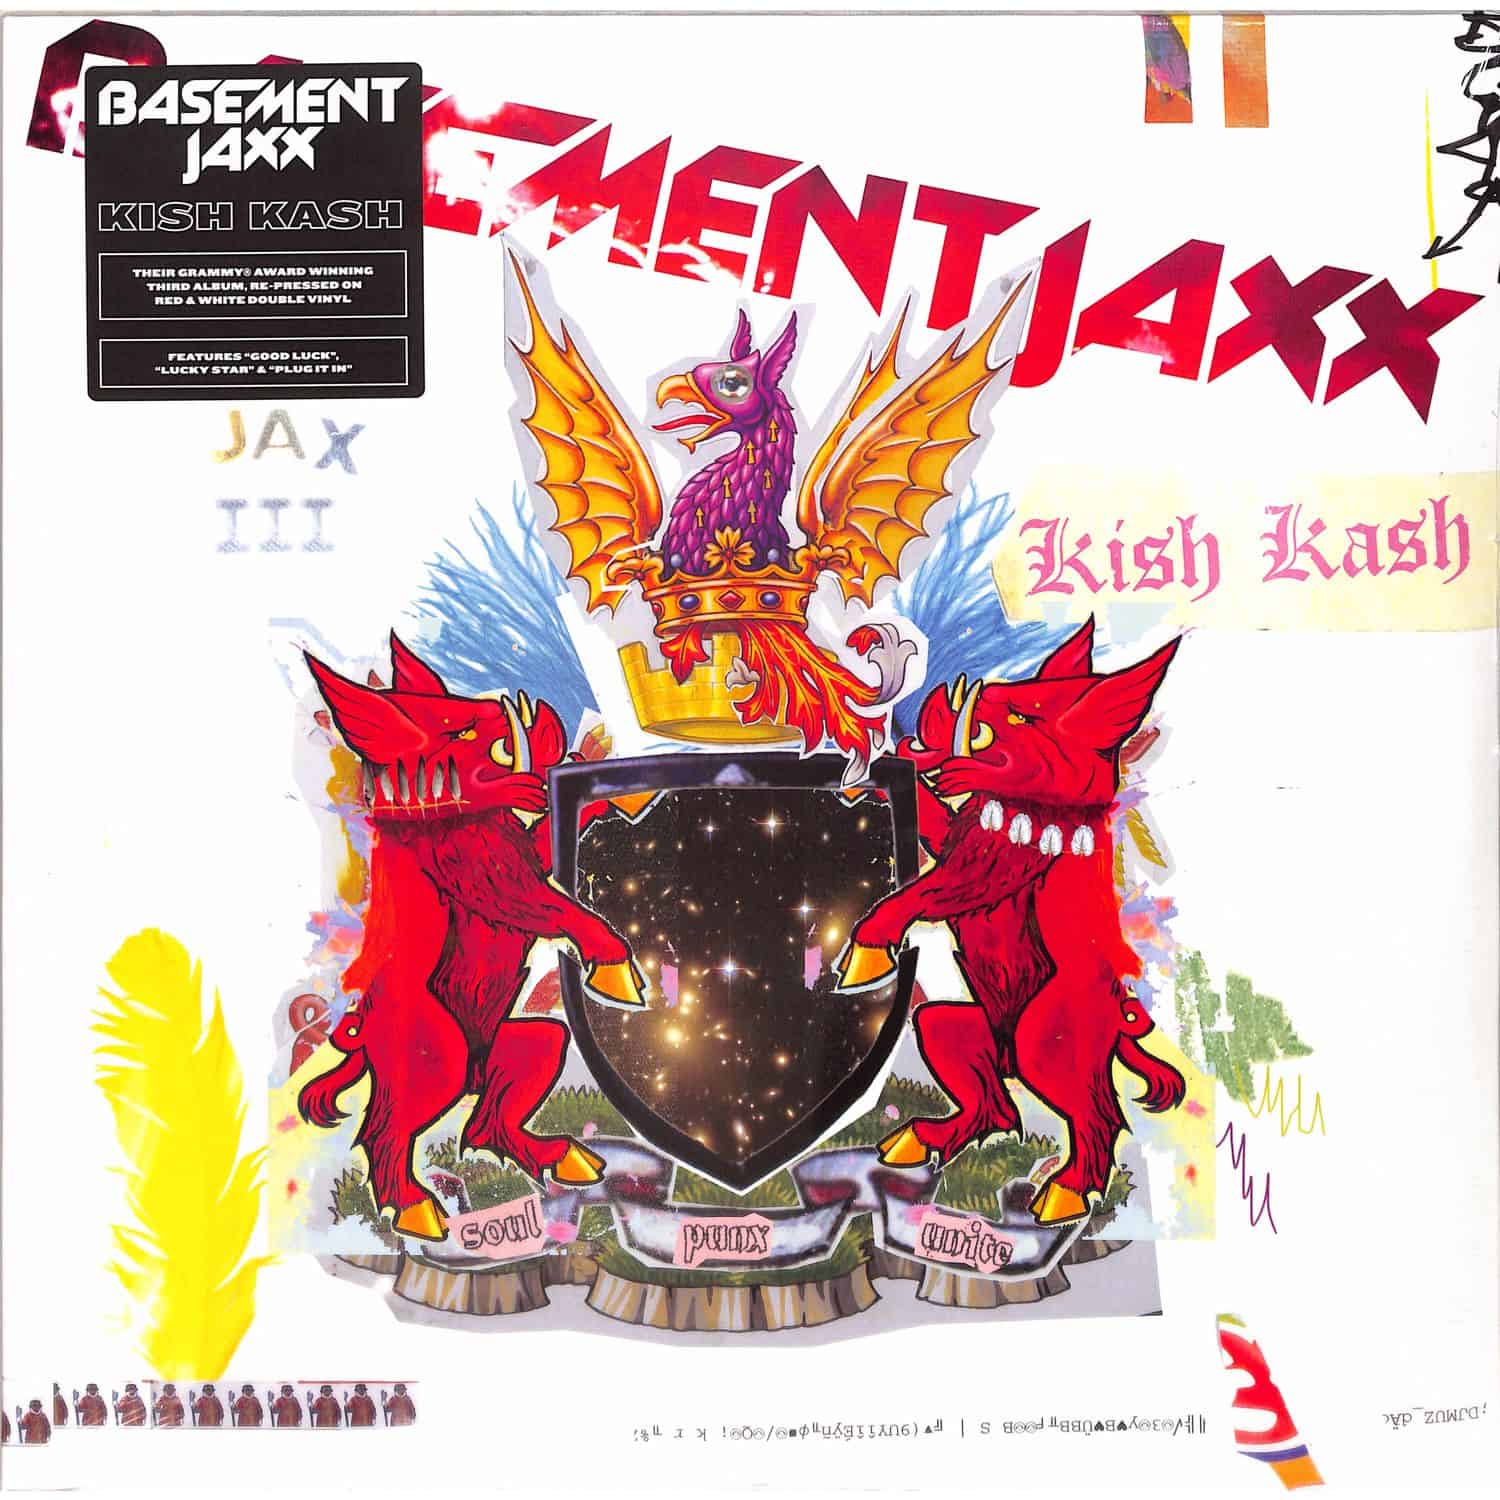 Basement Jaxx - KISH KASH 